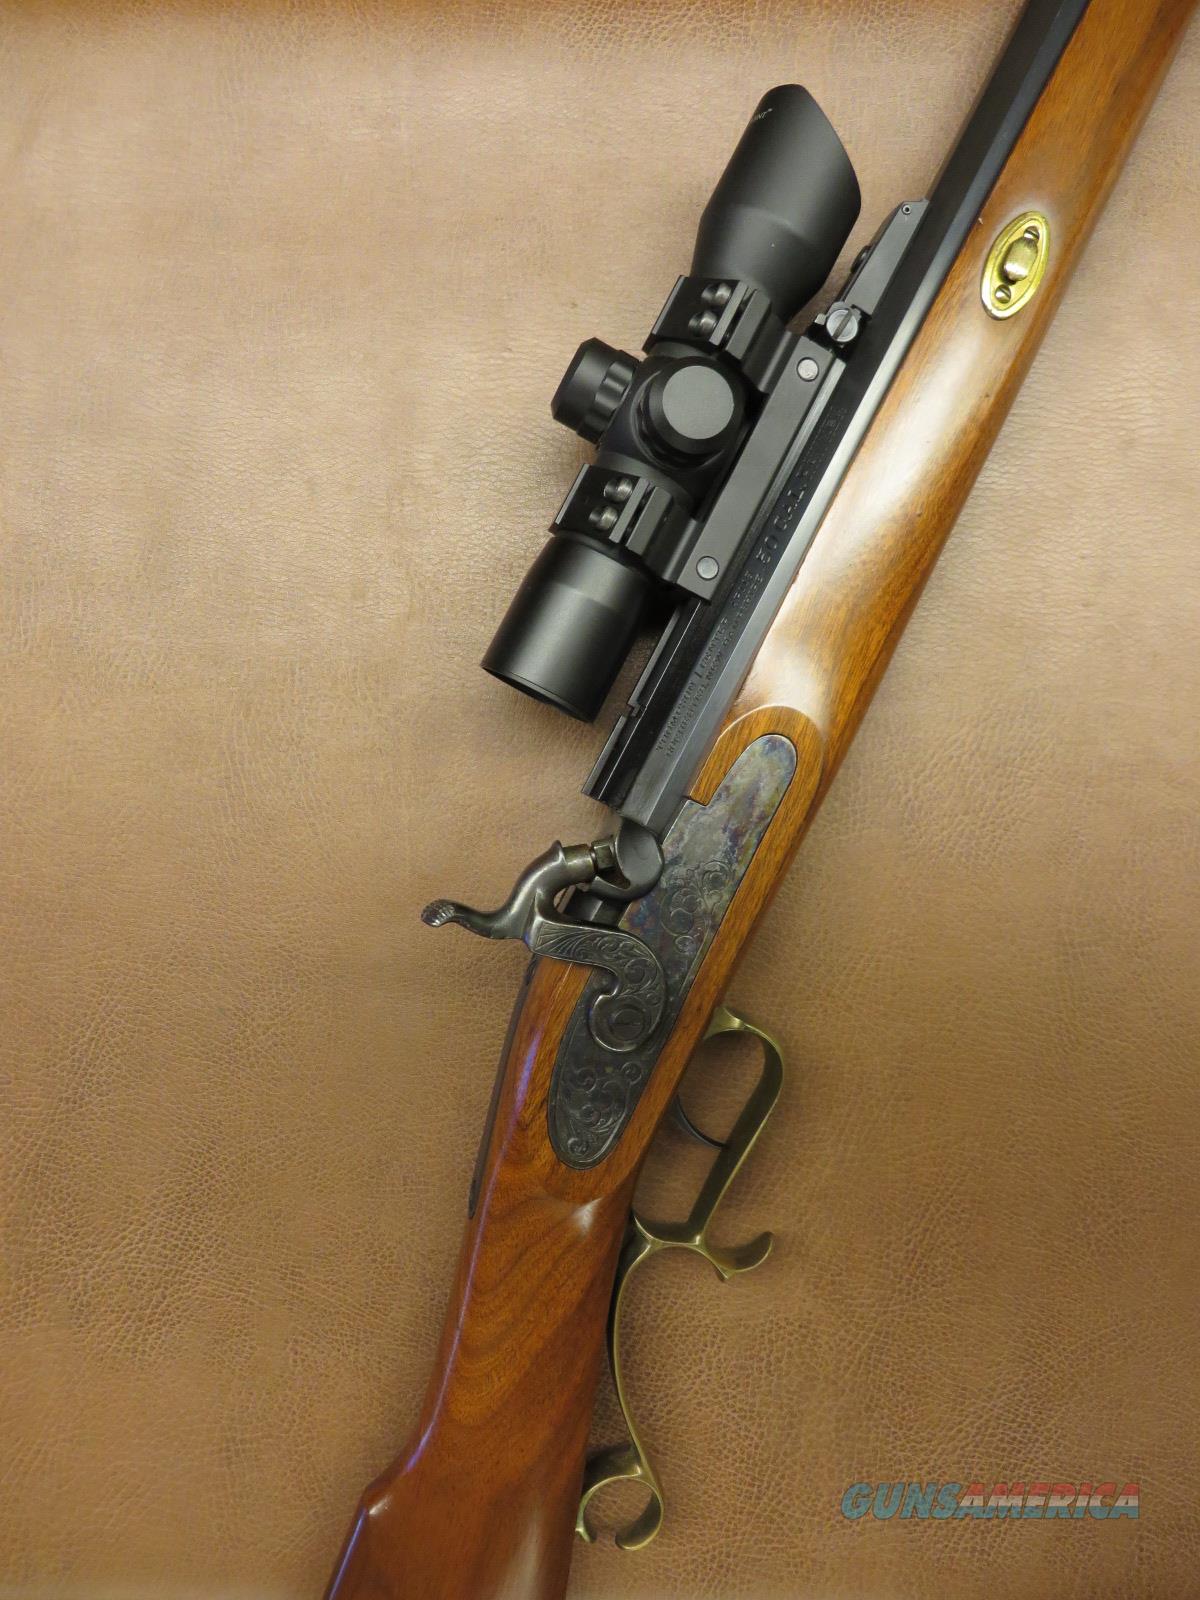 brass scope for hawken rifle